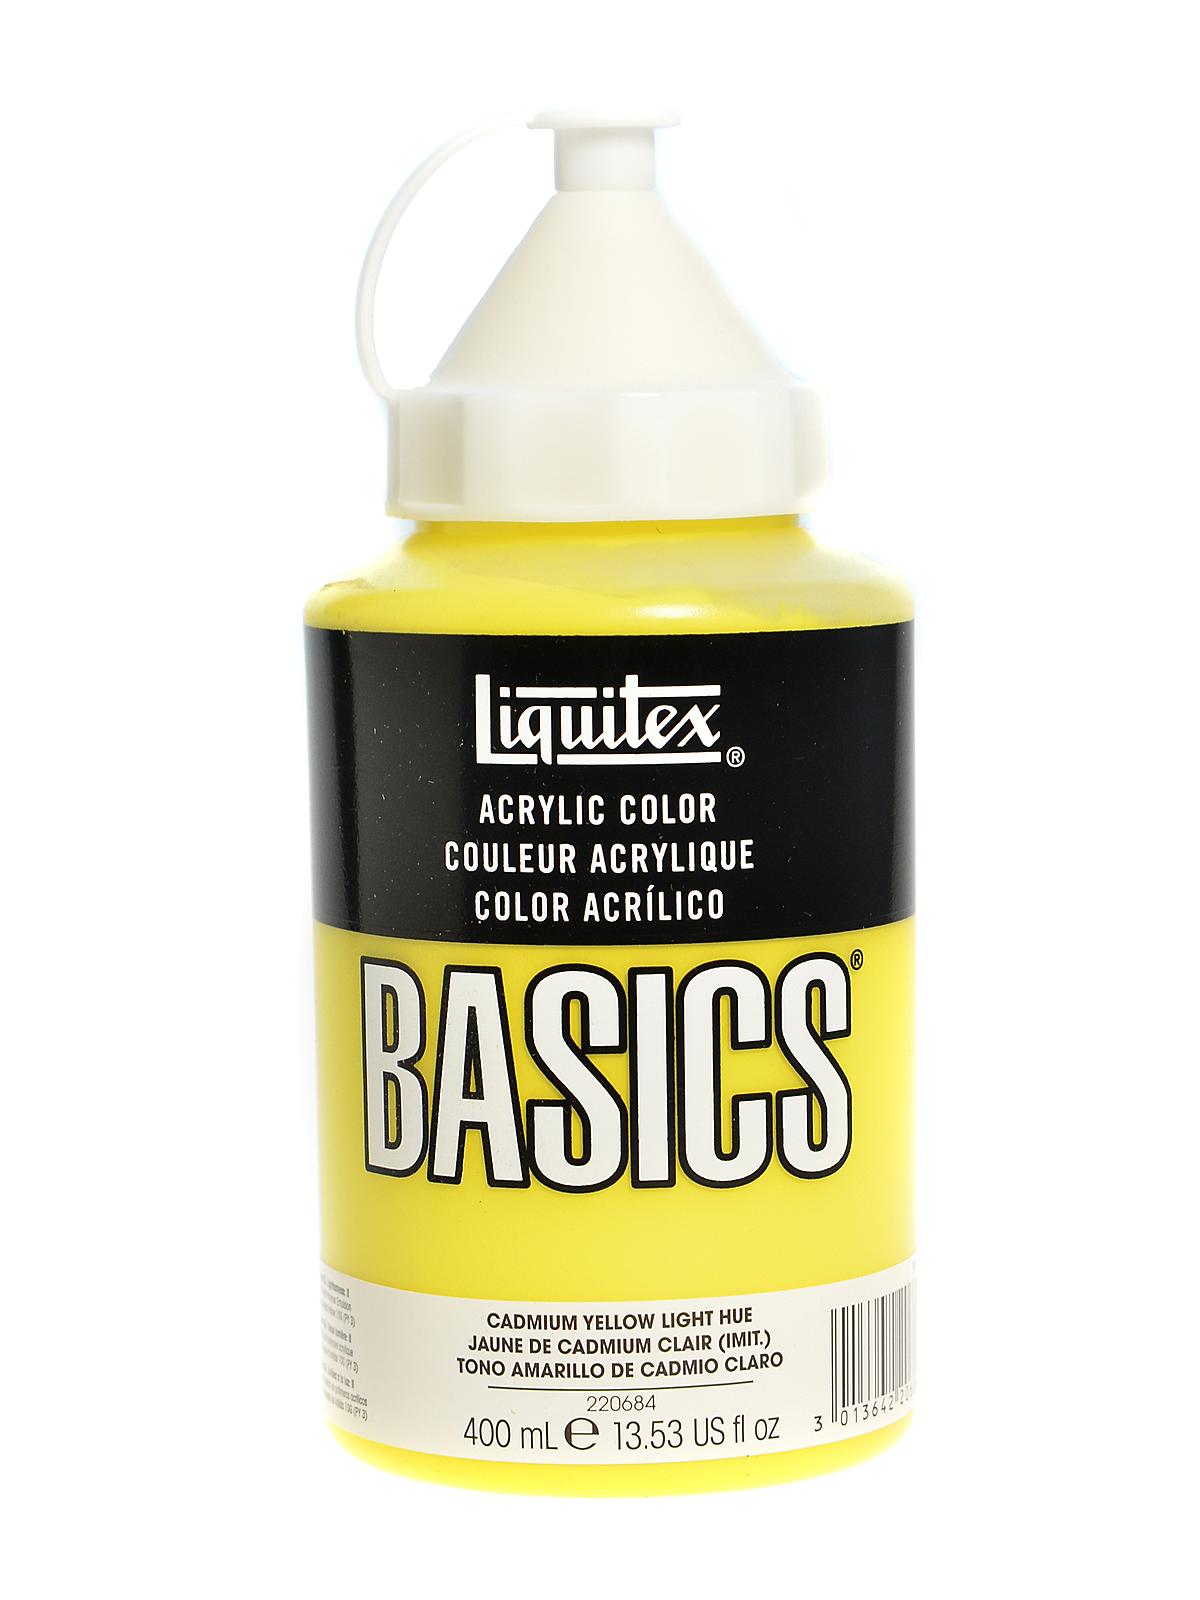 Basics Acrylics Colors Cadmium Yellow Light Hue 13.5 Oz. Squeeze Bottle